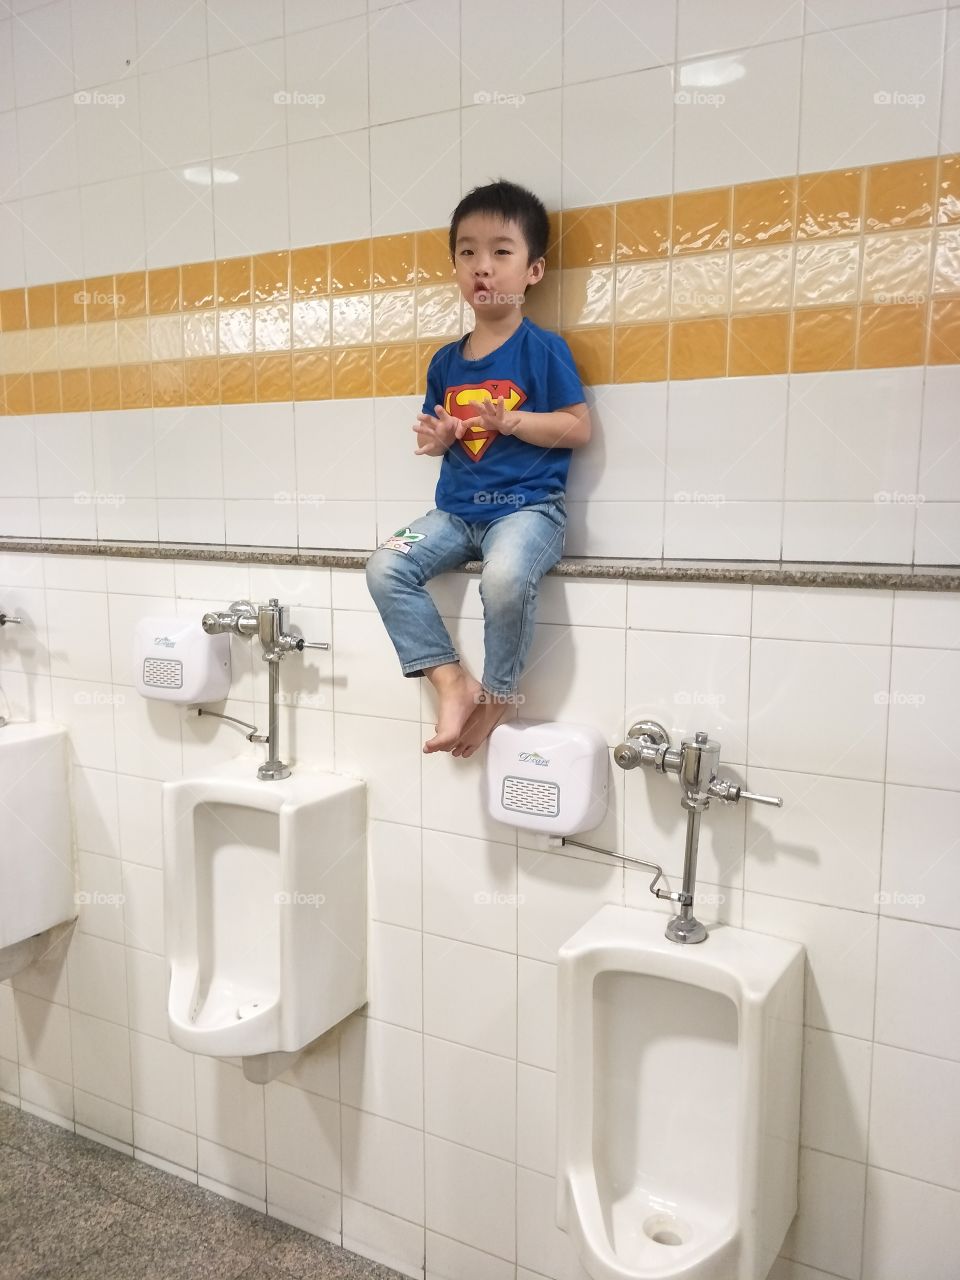 superman in toilet